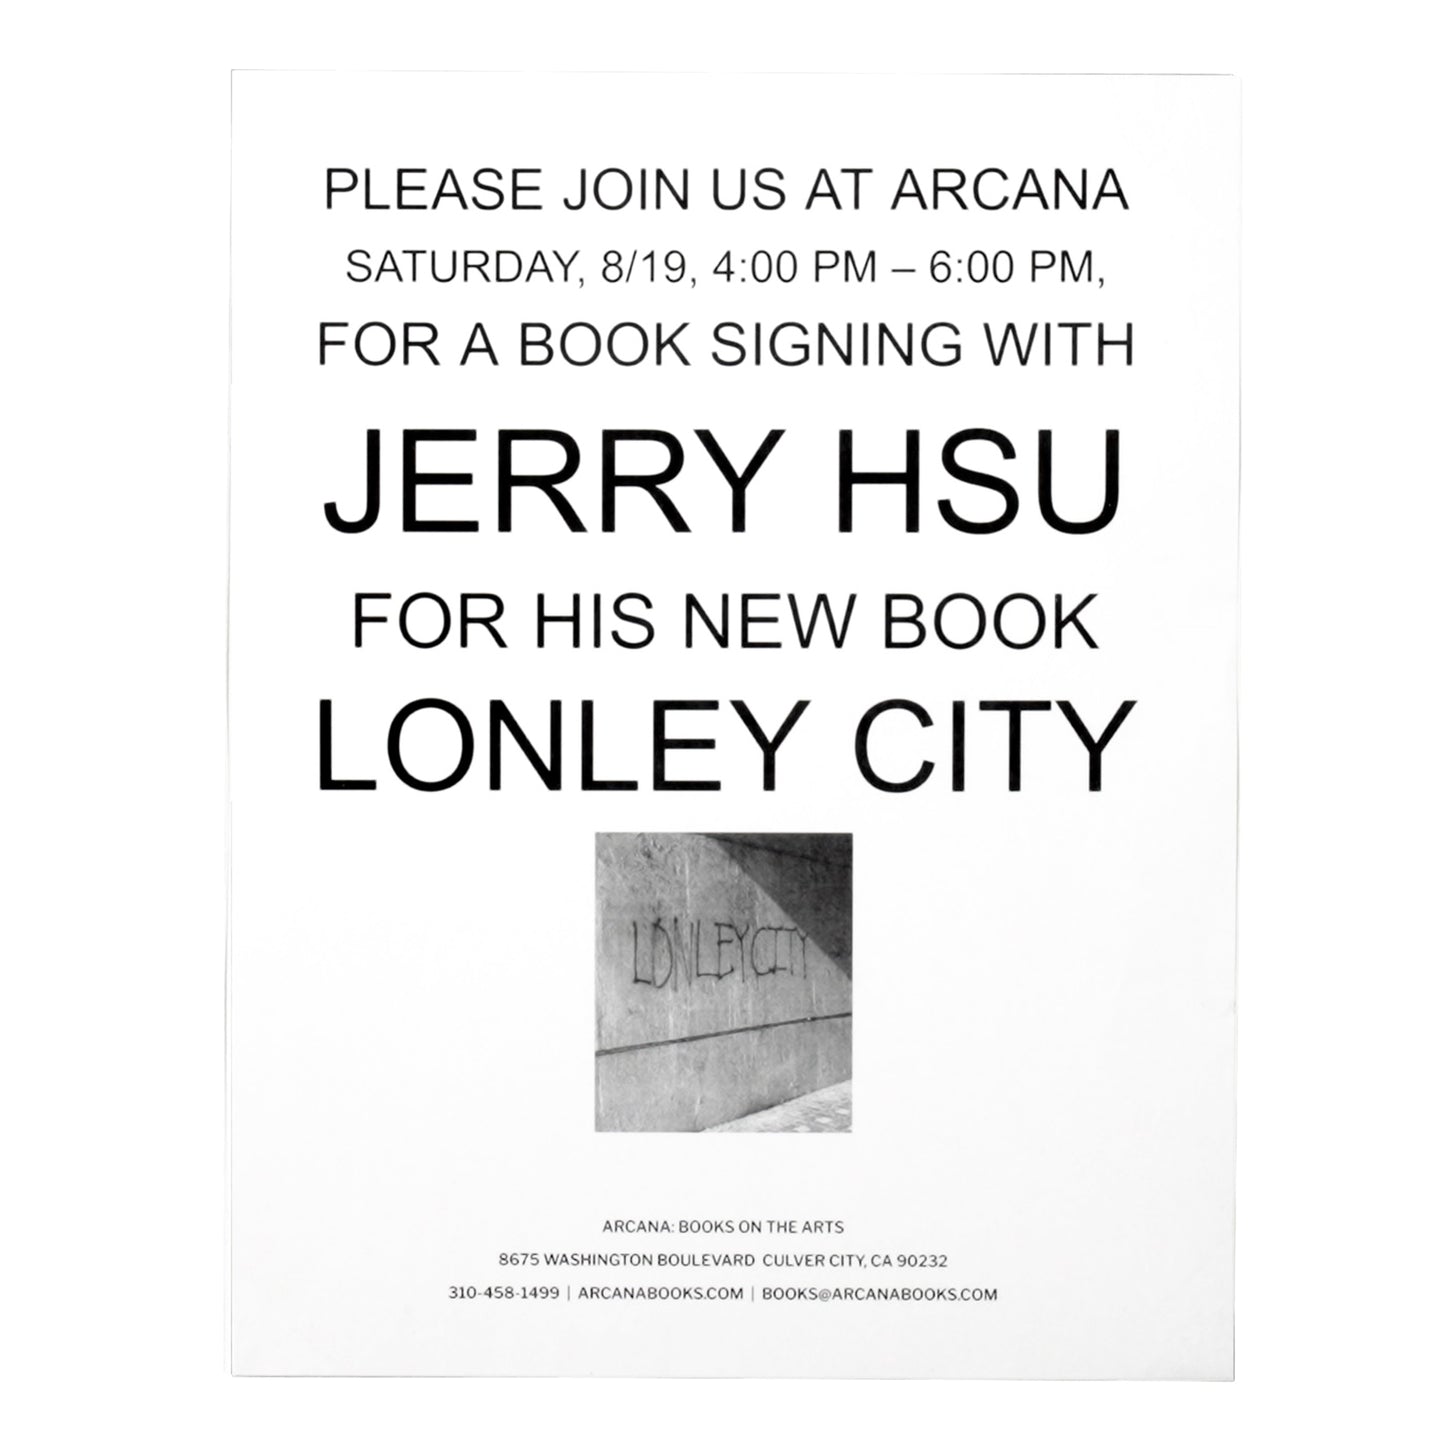 LONELY CITY x JERRY HSU